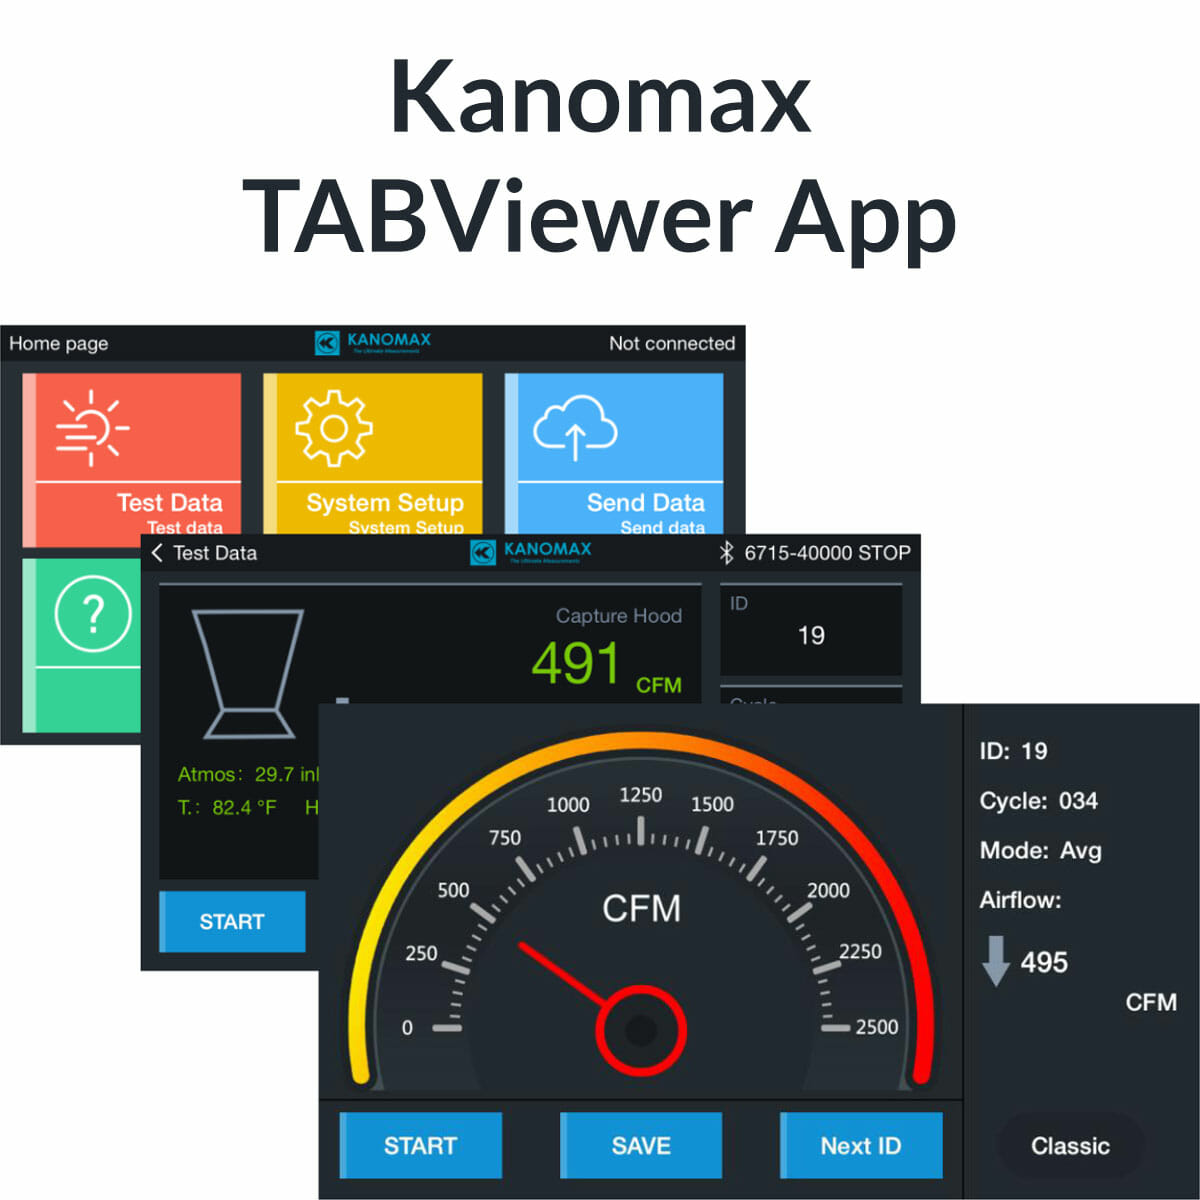 Kanomax TABViewer App Image